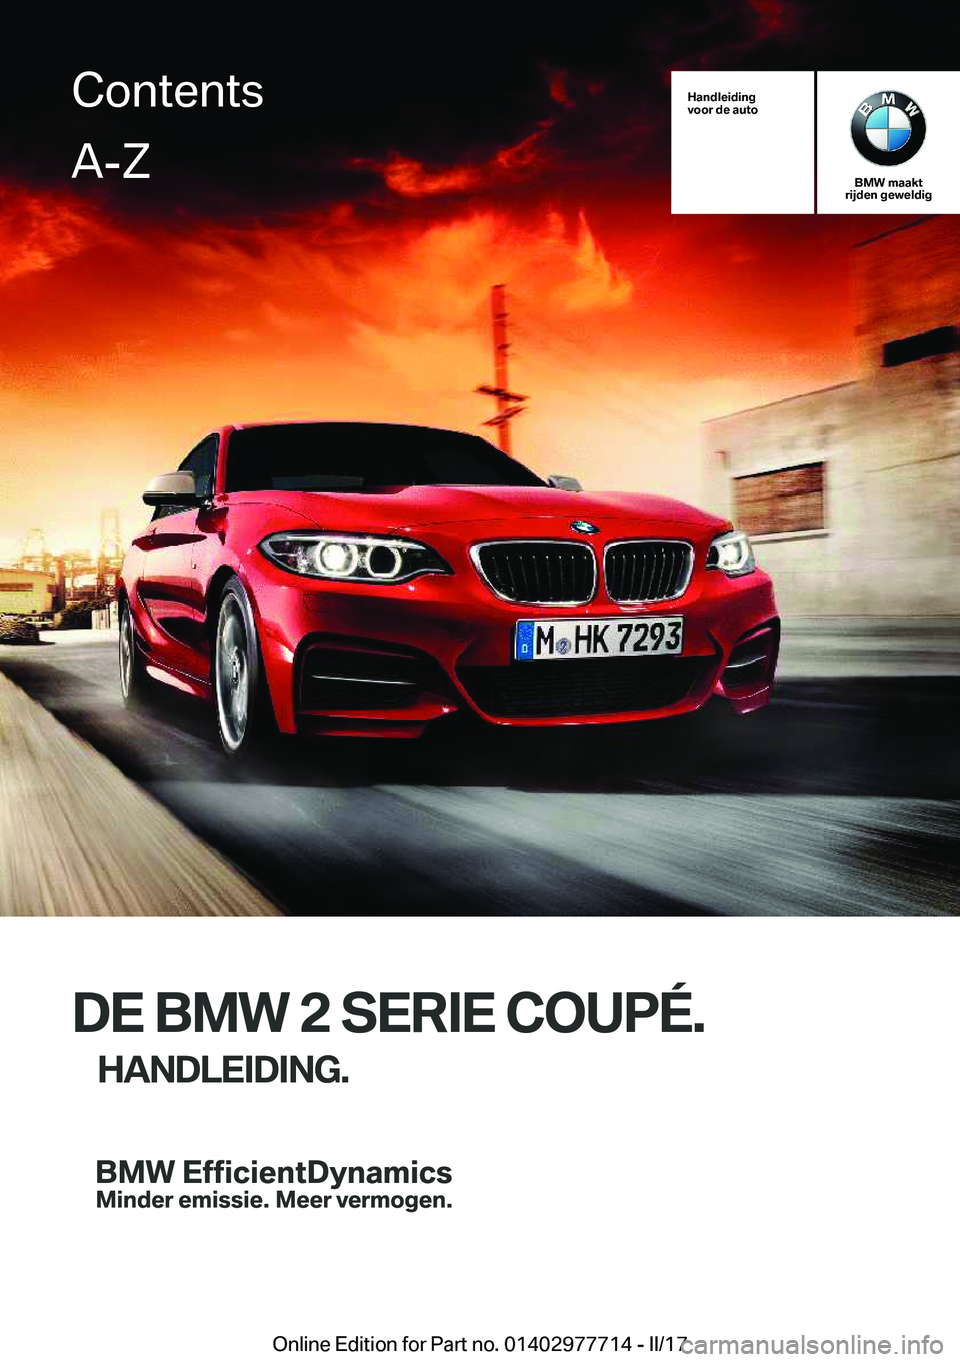 BMW 2 SERIES COUPE 2017  Instructieboekjes (in Dutch) �H�a�n�d�l�e�i�d�i�n�g
�v�o�o�r��d�e��a�u�t�o
�B�M�W��m�a�a�k�t
�r�i�j�d�e�n��g�e�w�e�l�d�i�g
�D�E��B�M�W��2��S�E�R�I�E��C�O�U�P�